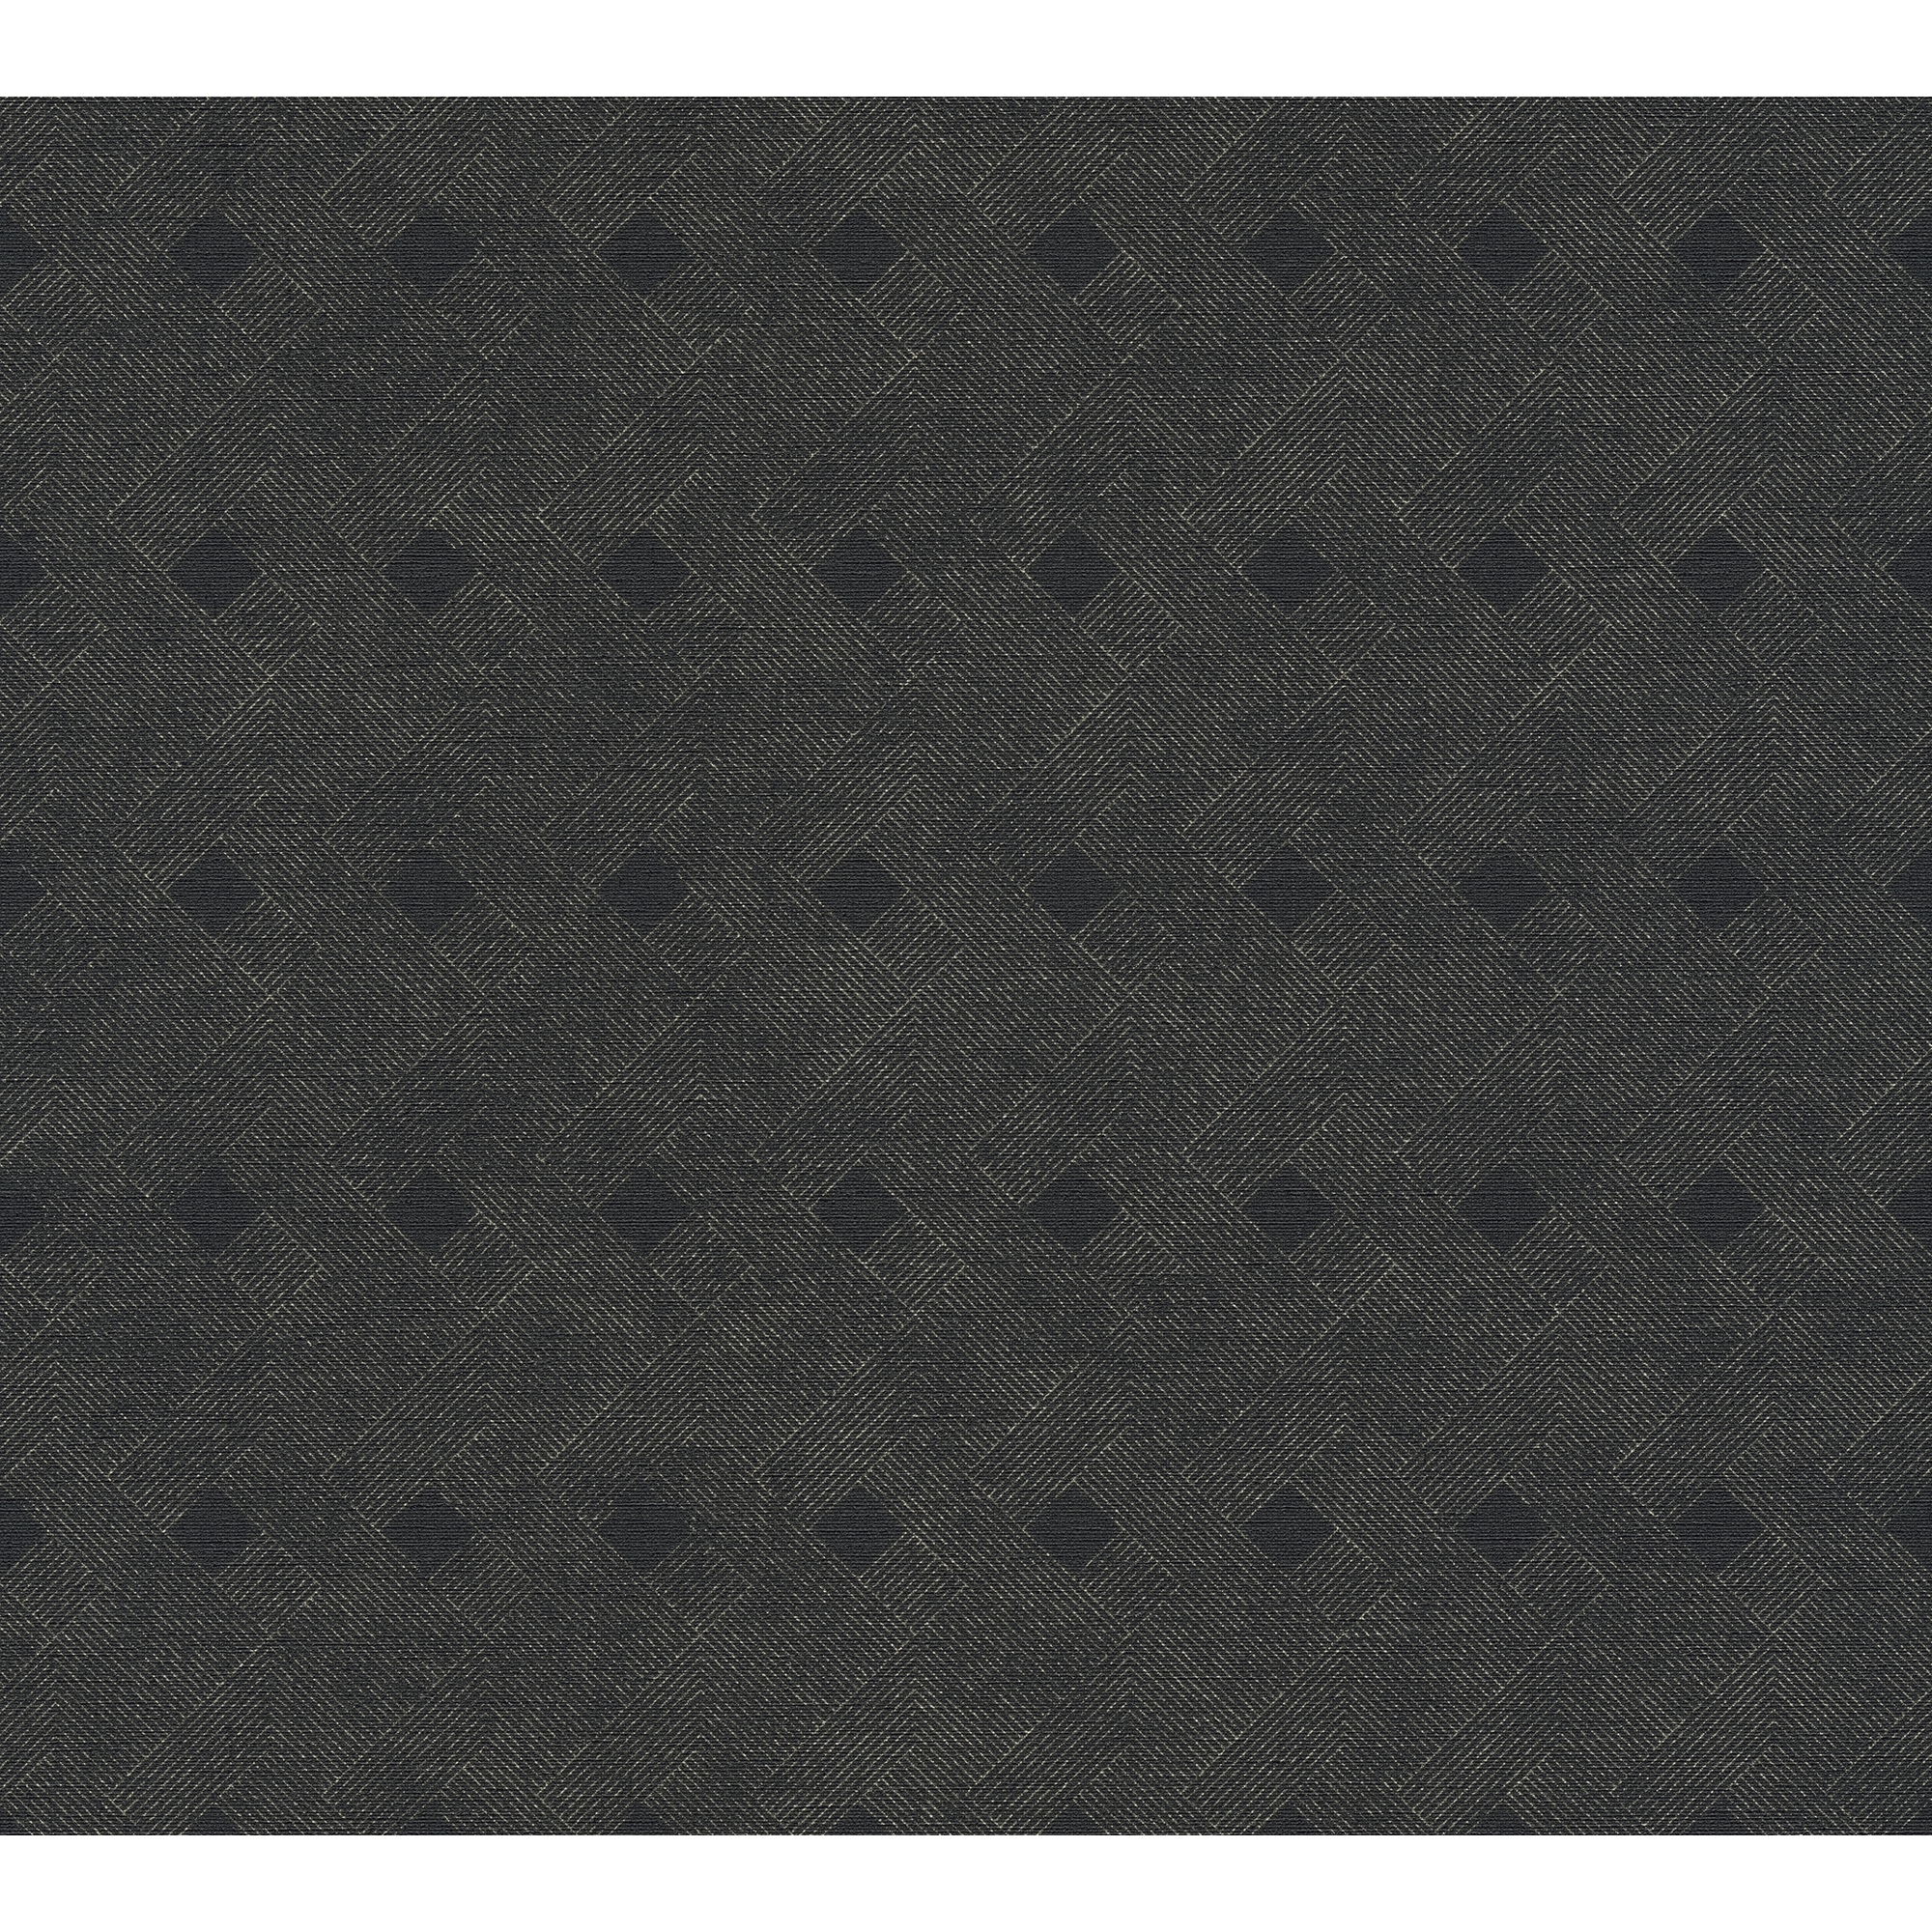 Vliestapete 'Cuba' Rauten schwarz 10,05 x 0,53 m + product picture